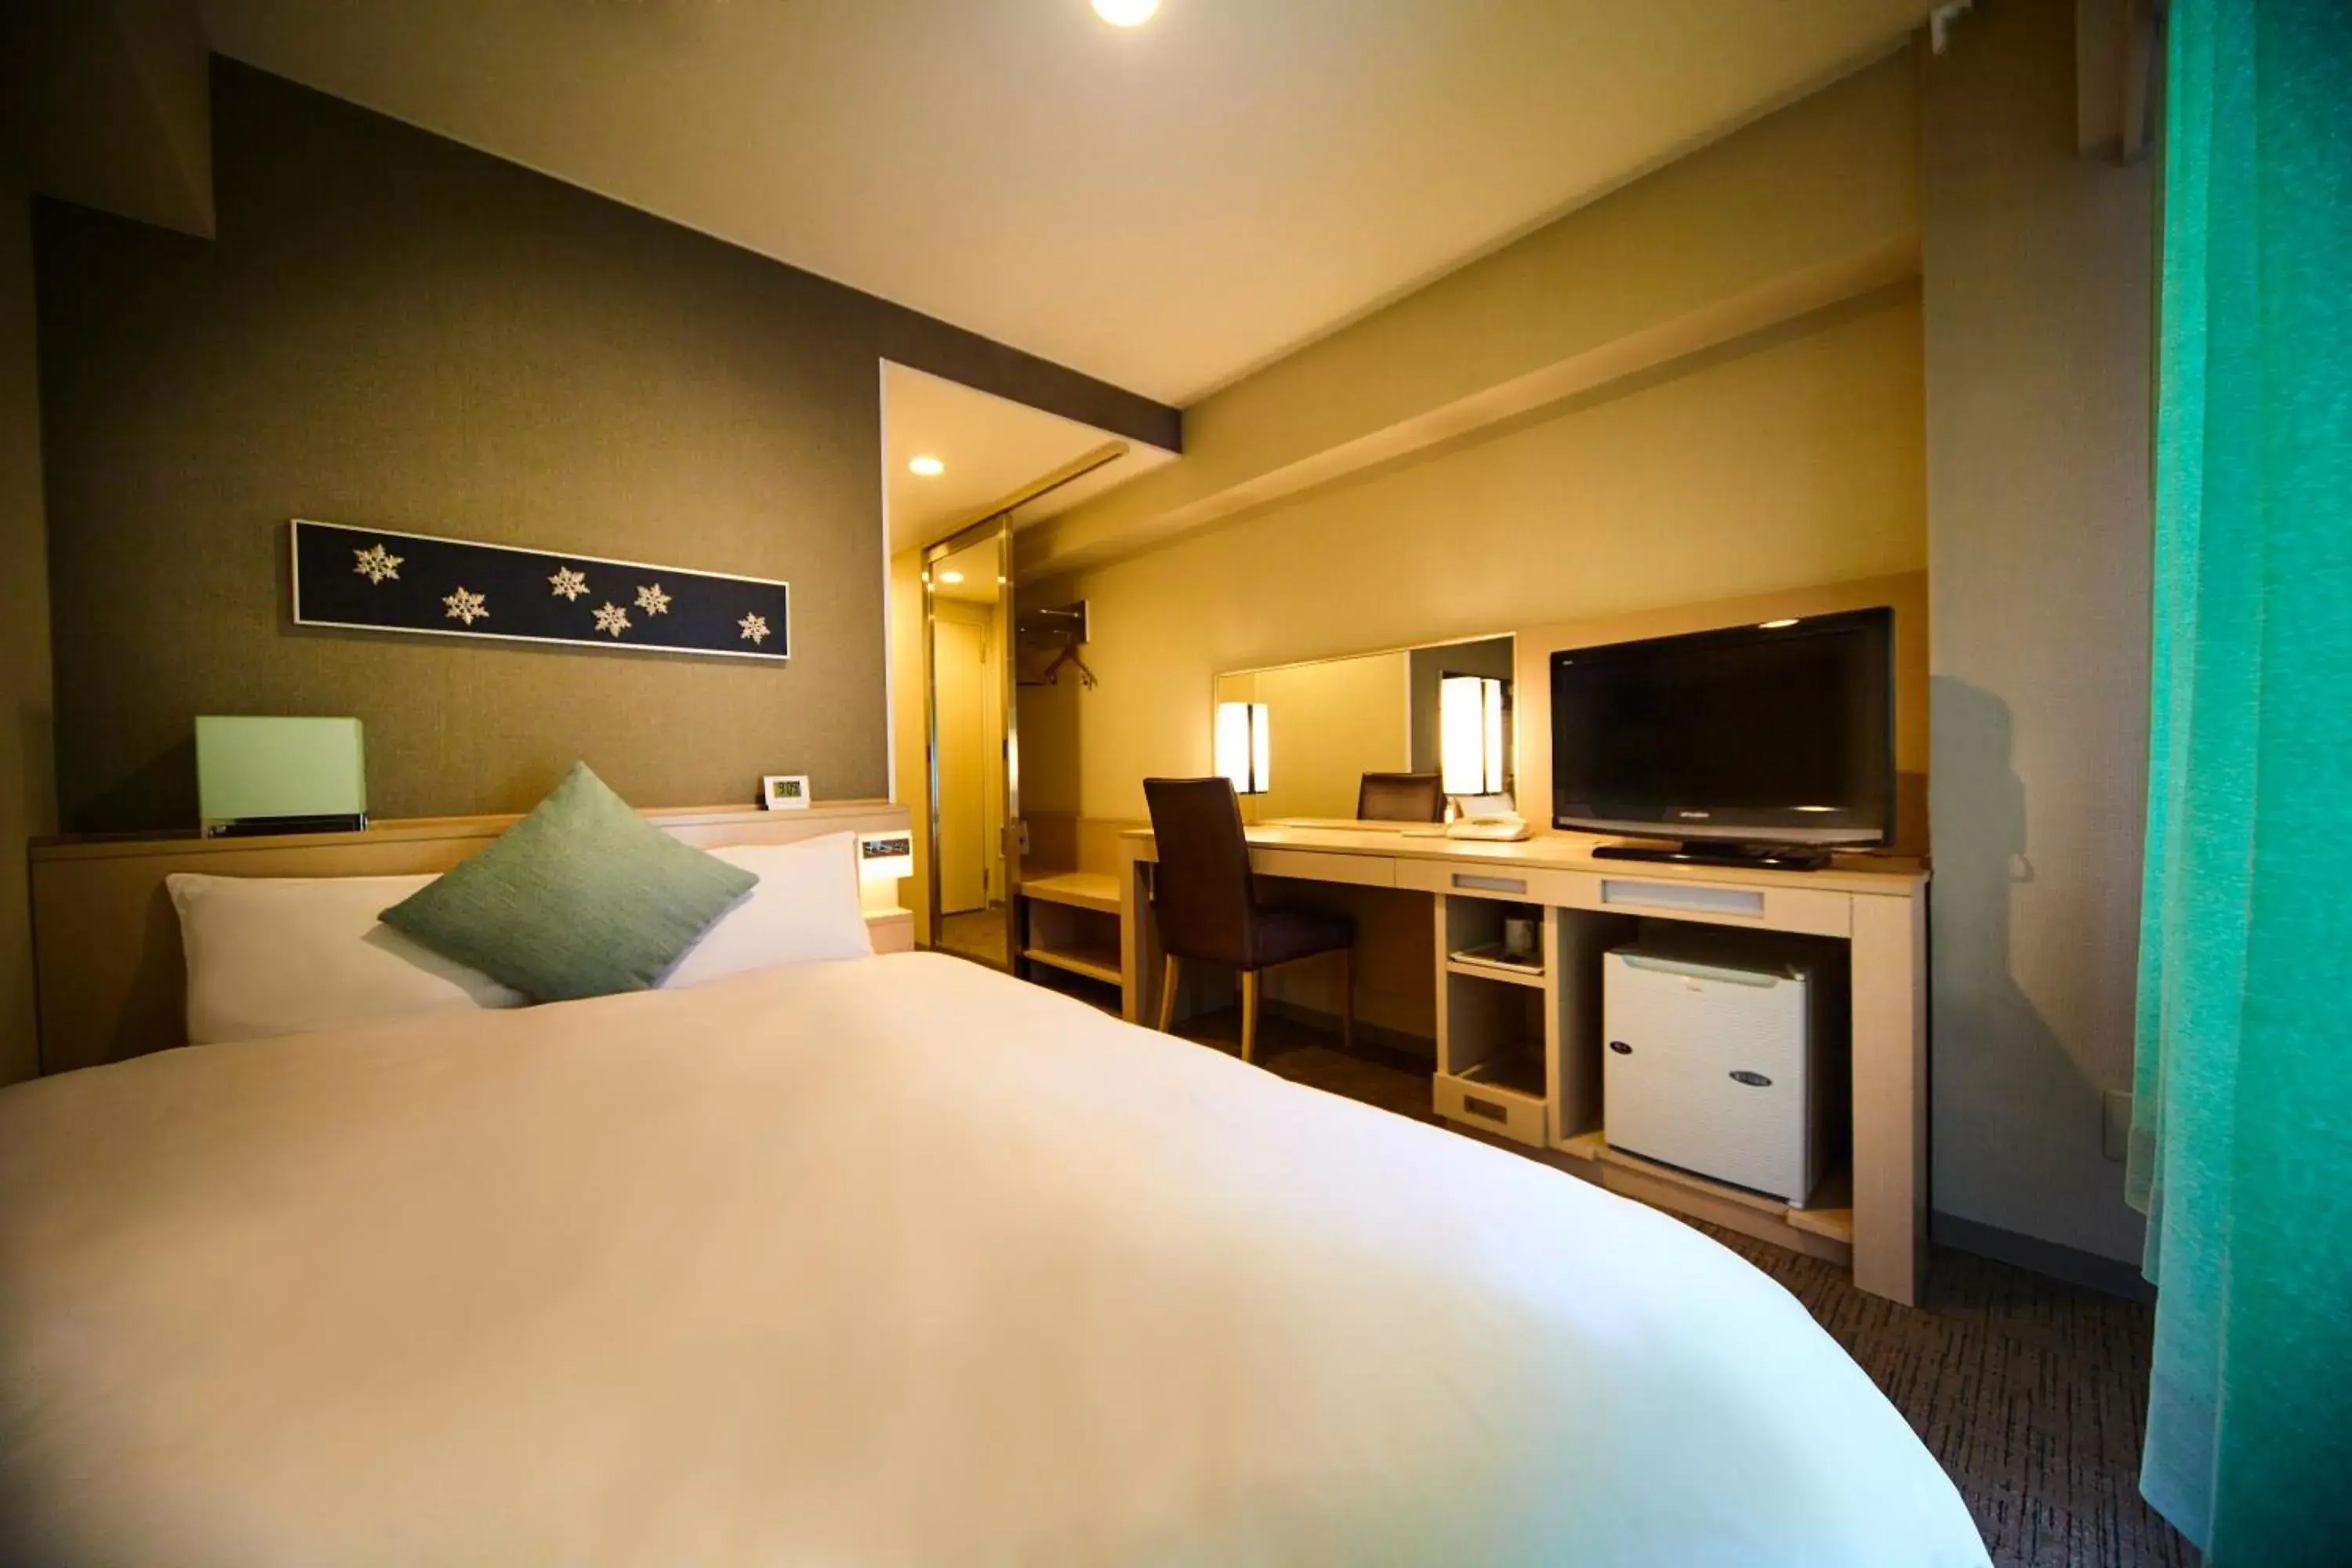 Bed, Room Photo in Tmark City Hotel Sapporo